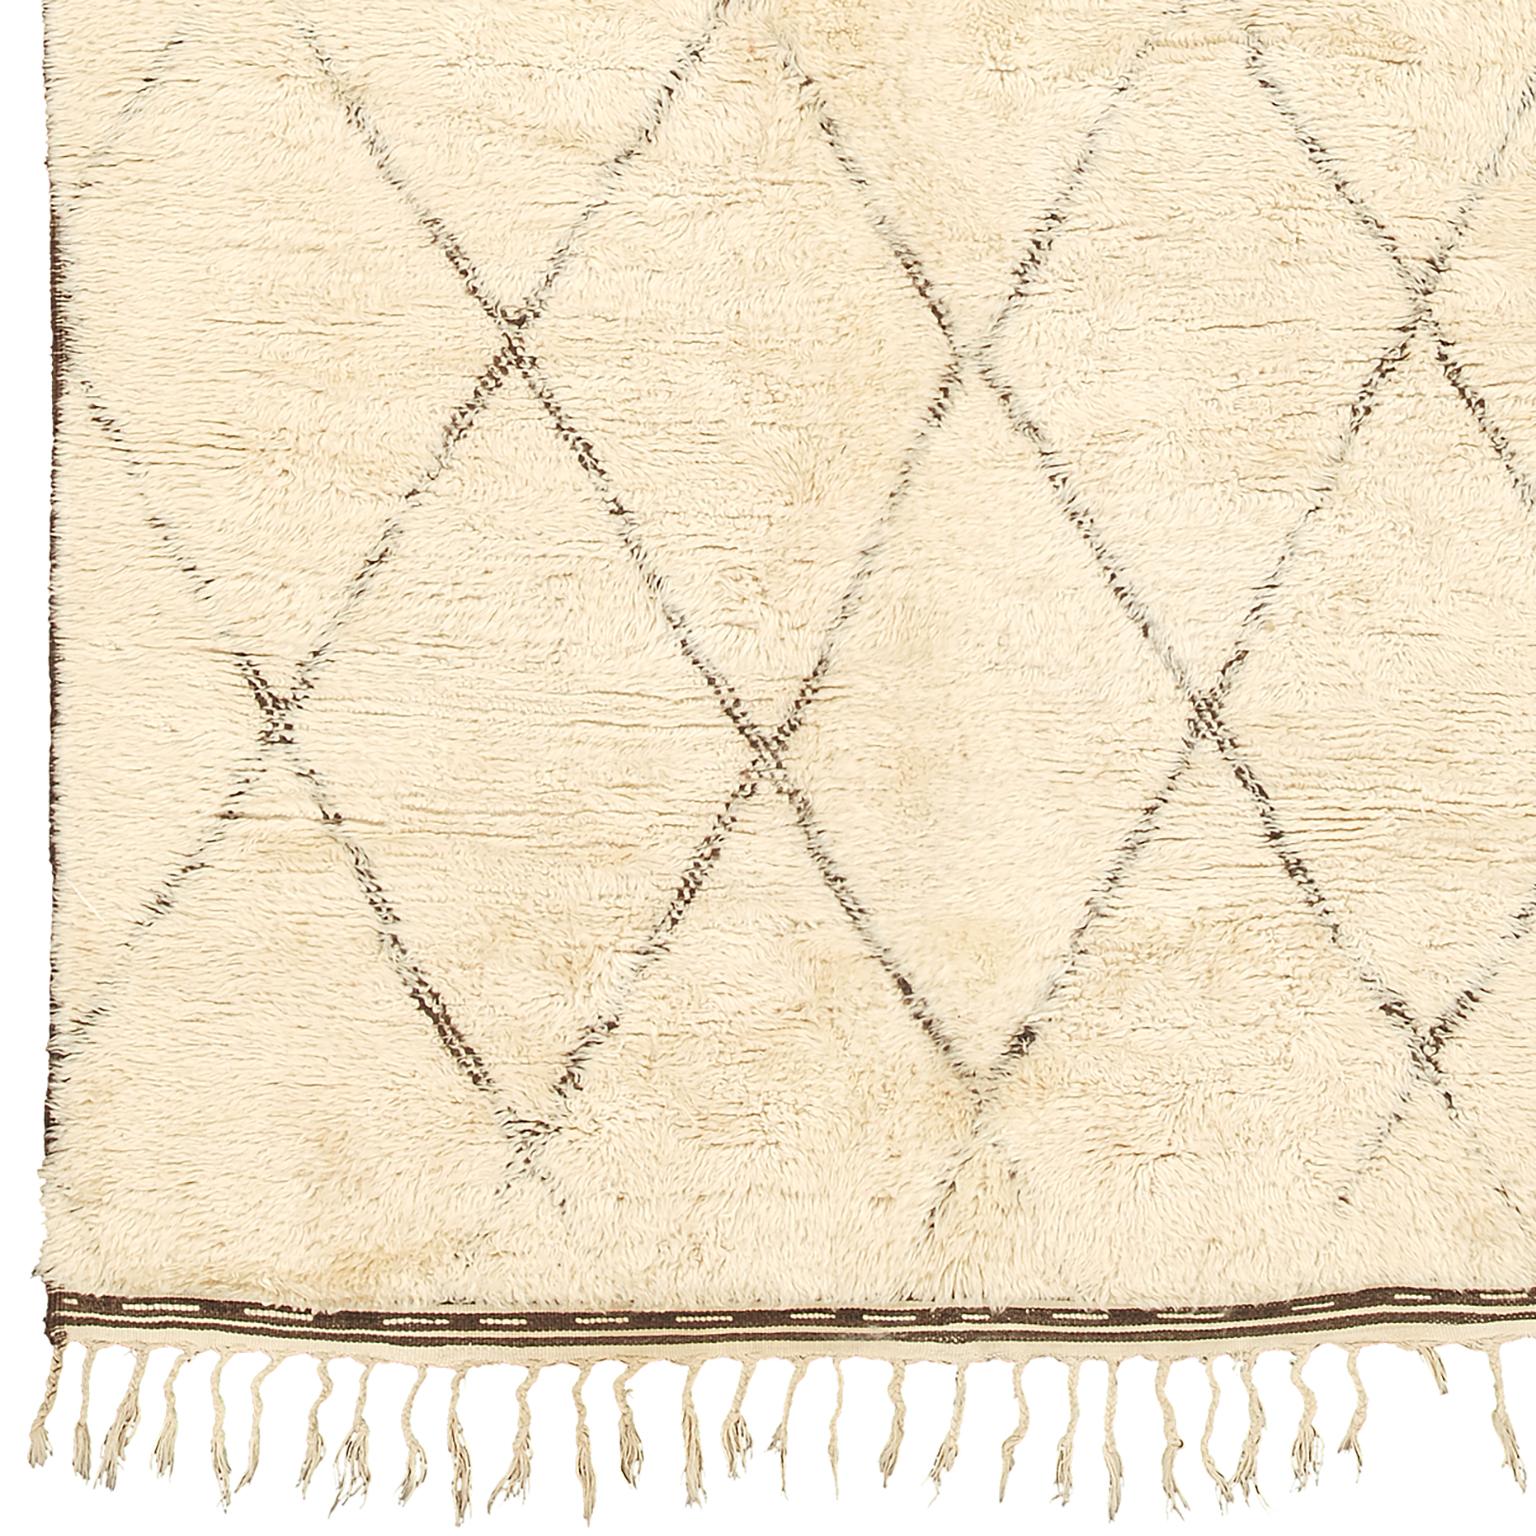 Mid-20th century Moroccan Beni Ouarain carpet
Morocco, mid-20th century.
Handwoven.
 